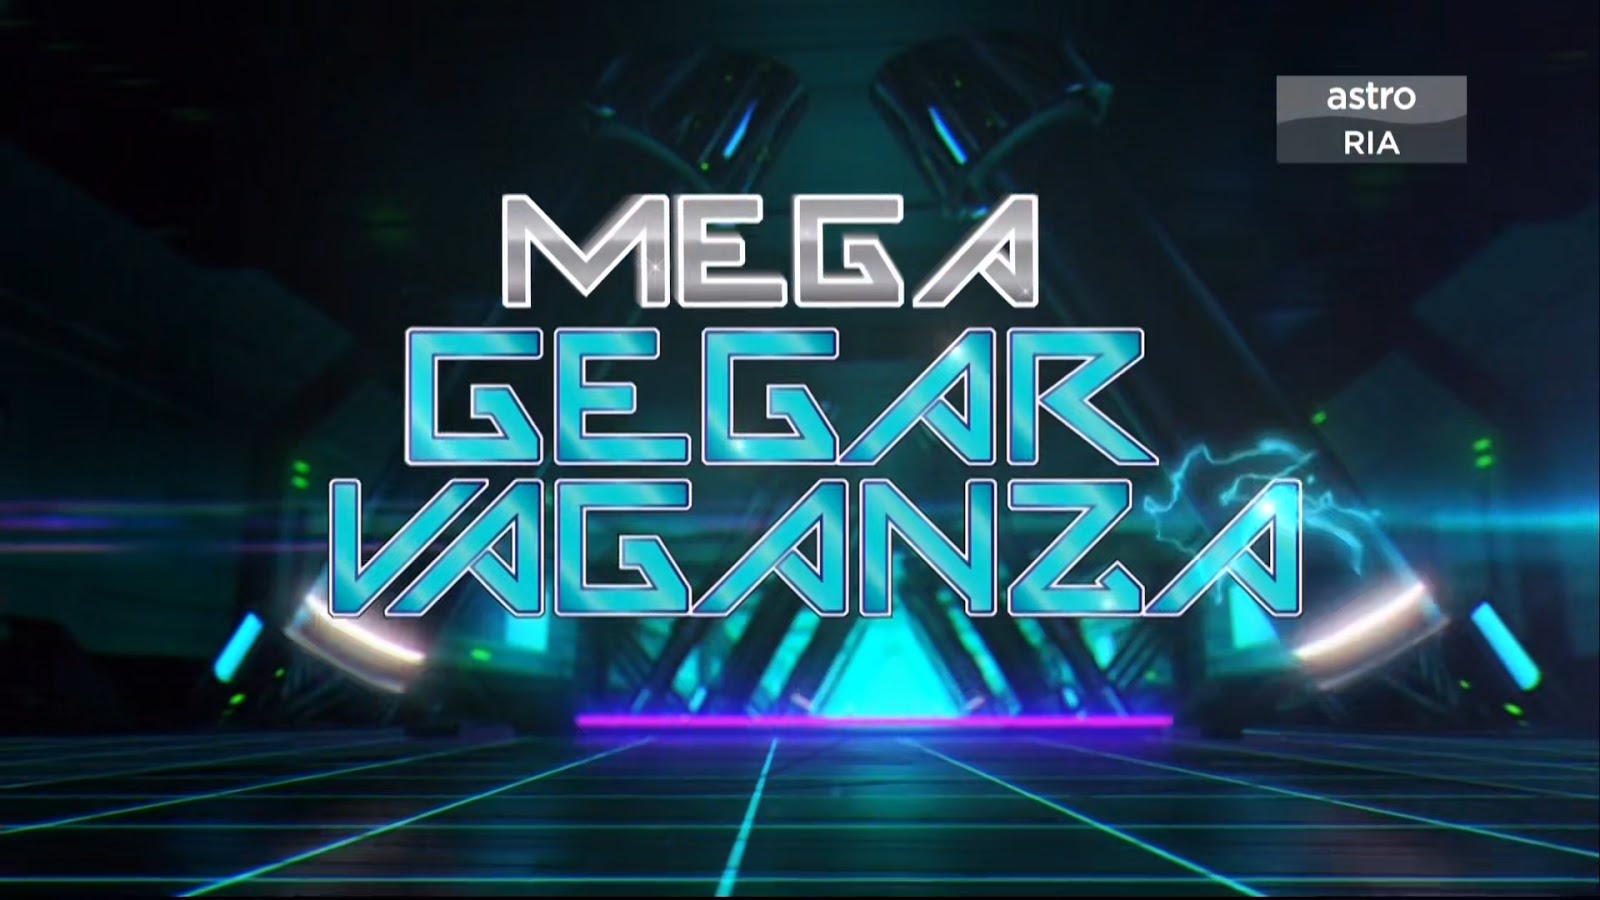 gegar vaganza 2016 download